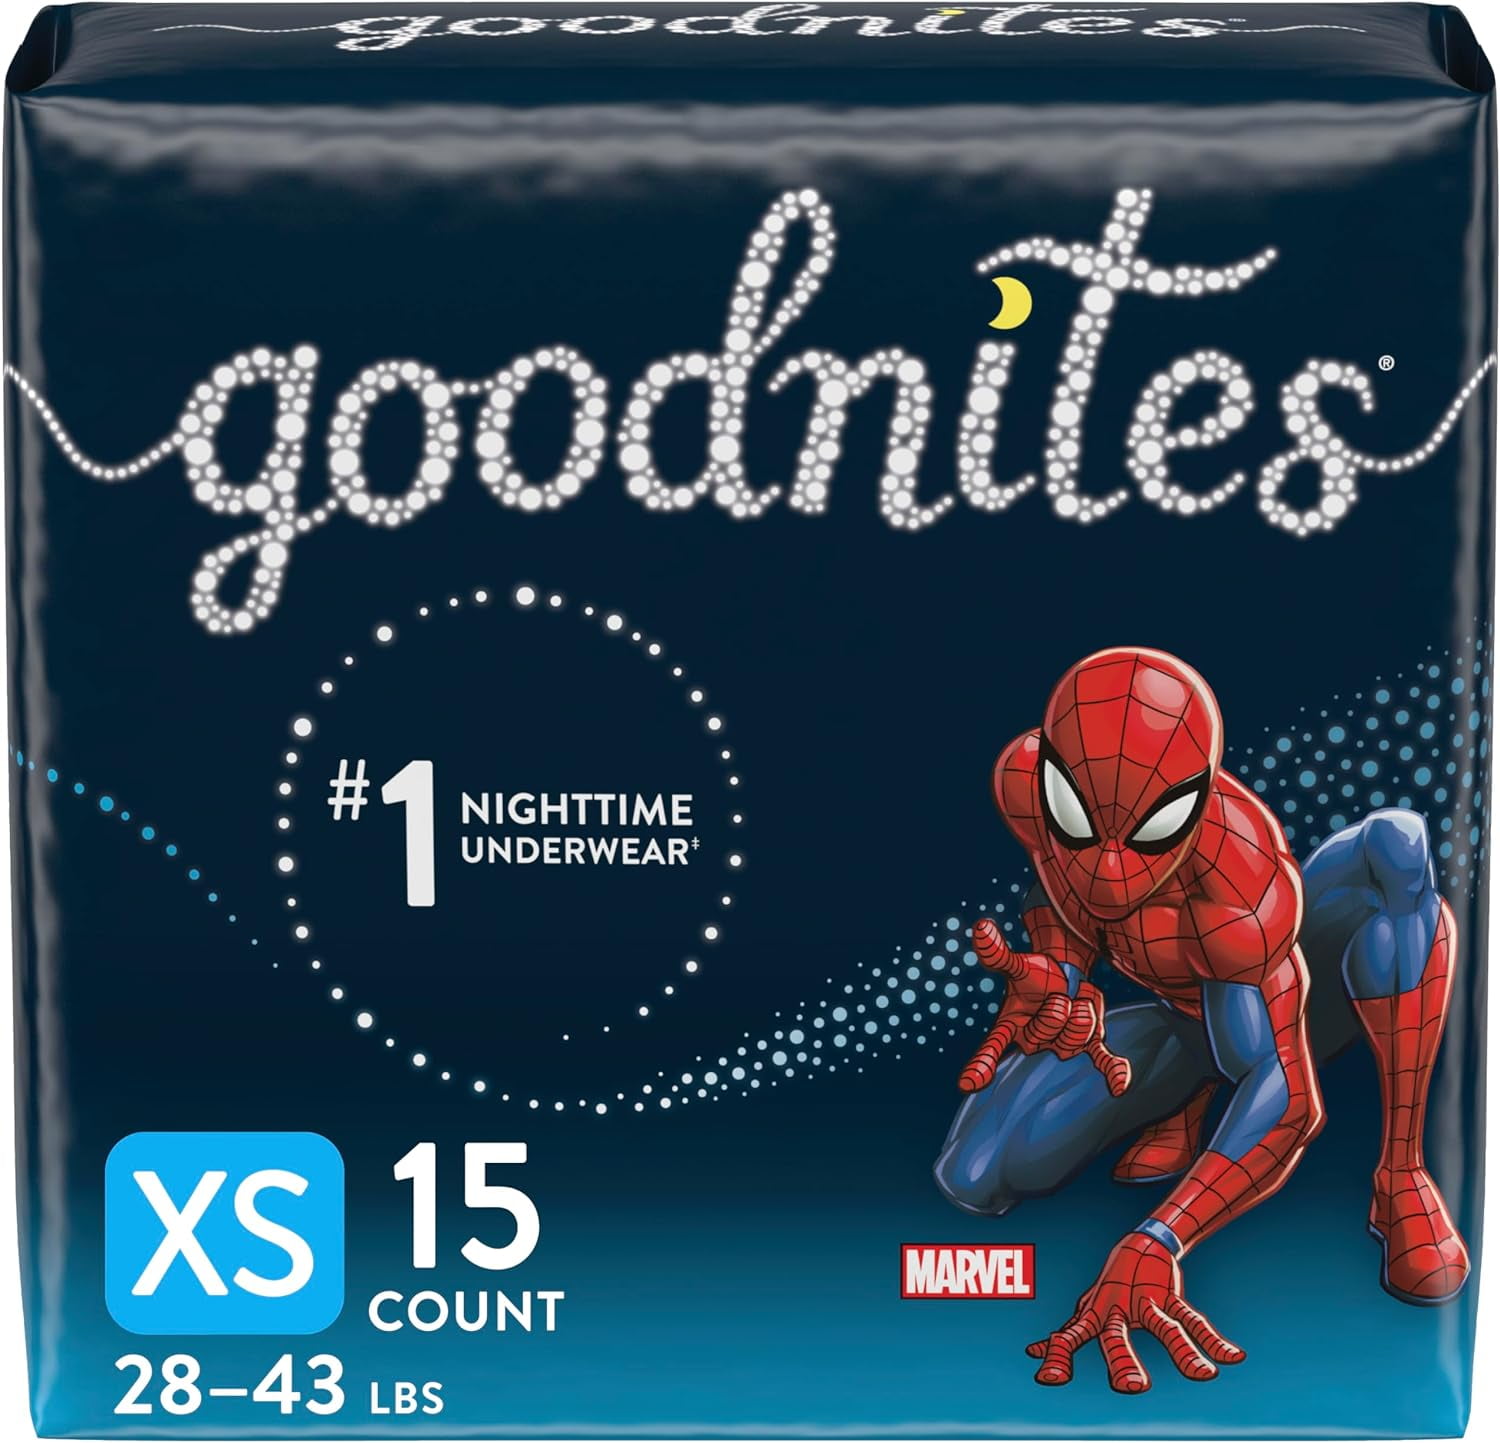 Goodnites Nighttime Bedwetting Underwear, Boys' XS (28-43 lb.), 99 Ct (3  Pack